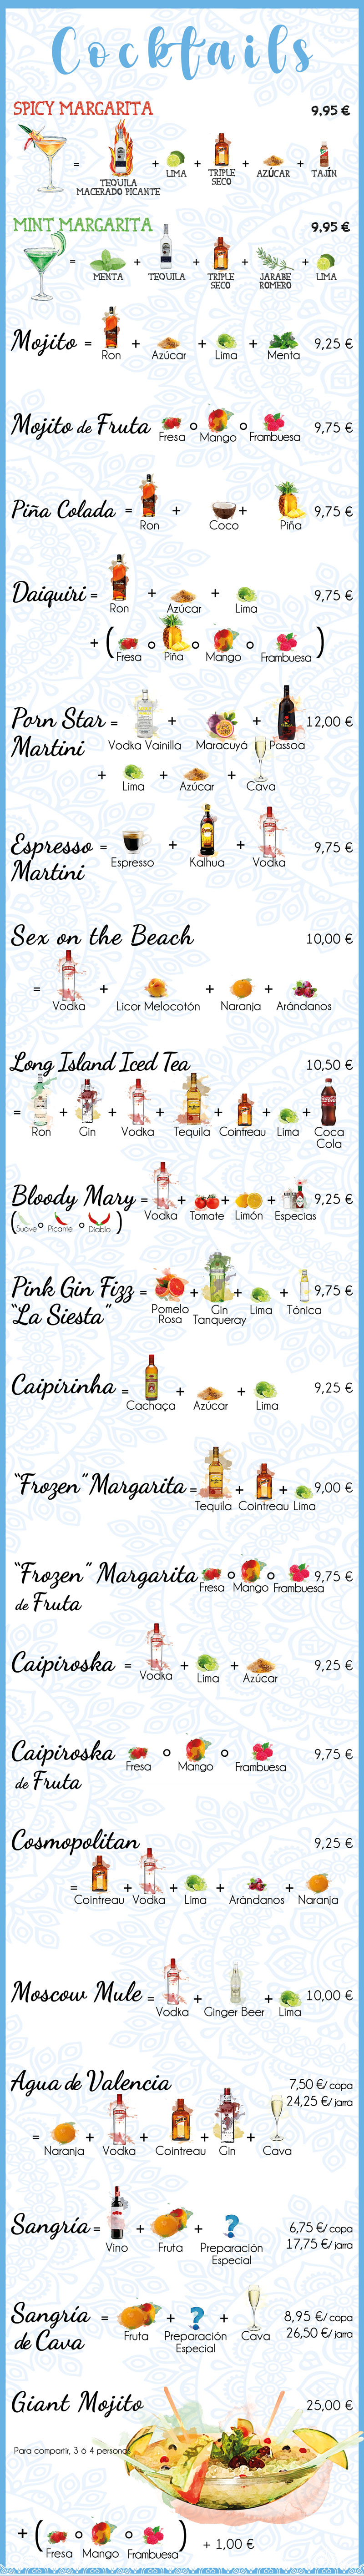 Cocktails1 La Siesta